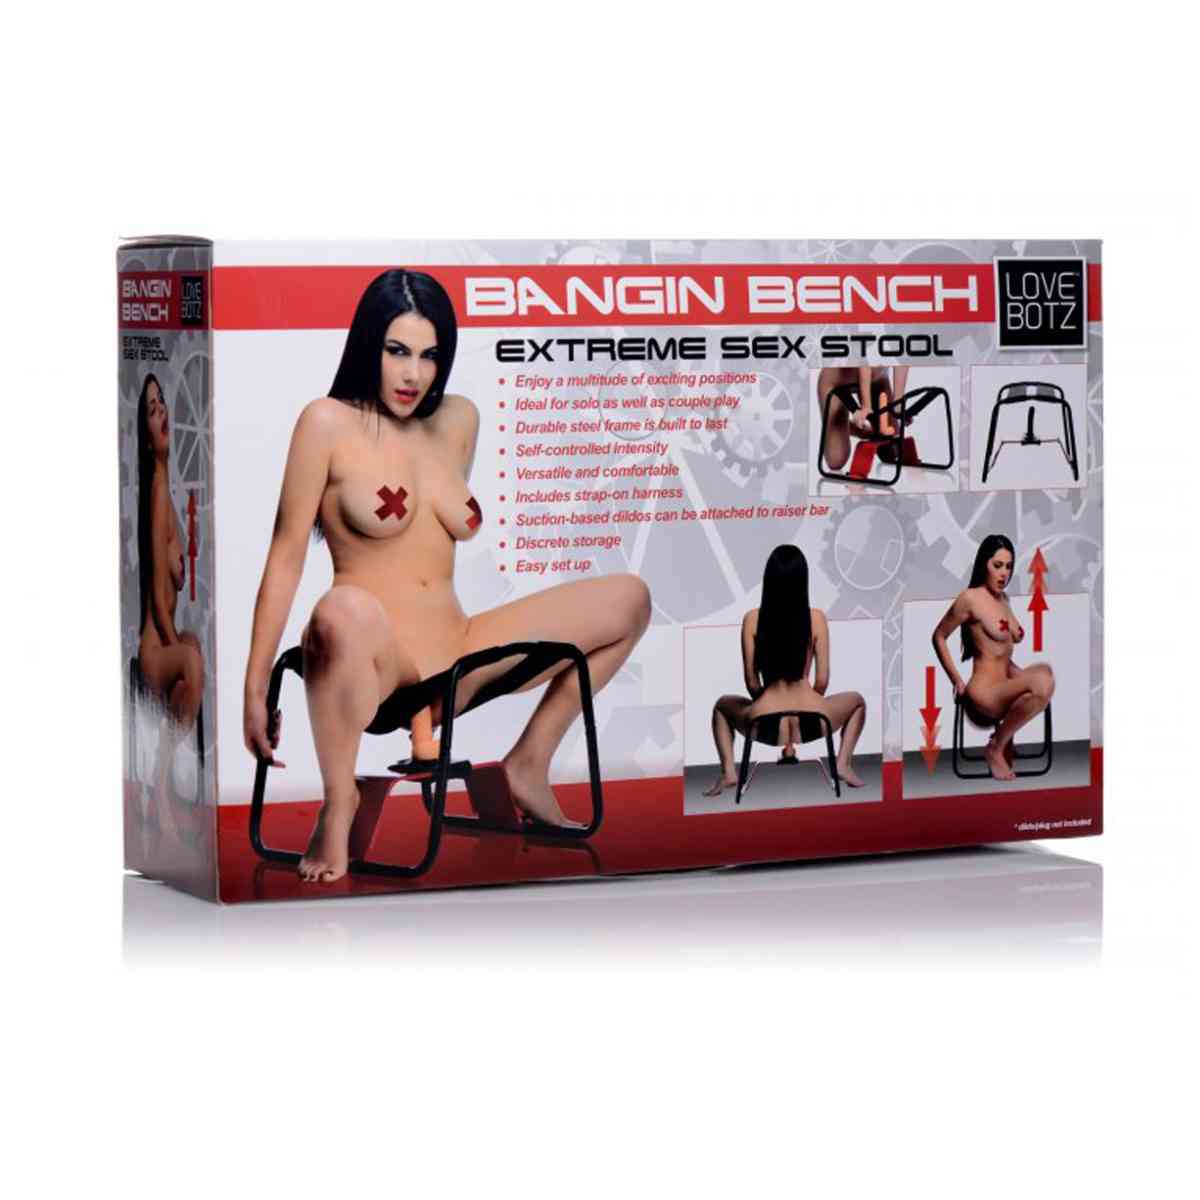 Verpackung Sexhocker "Bangin Bench"